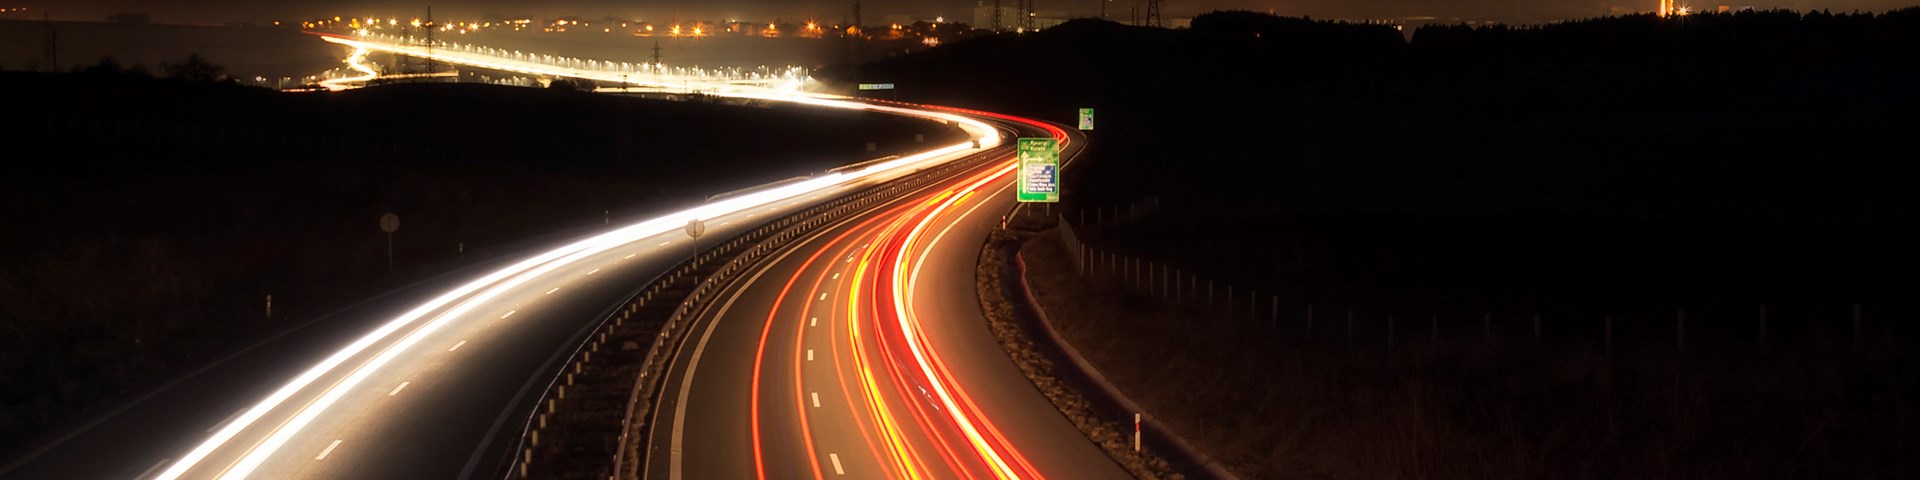 Nightime image of motorway showing bring vehicle lights